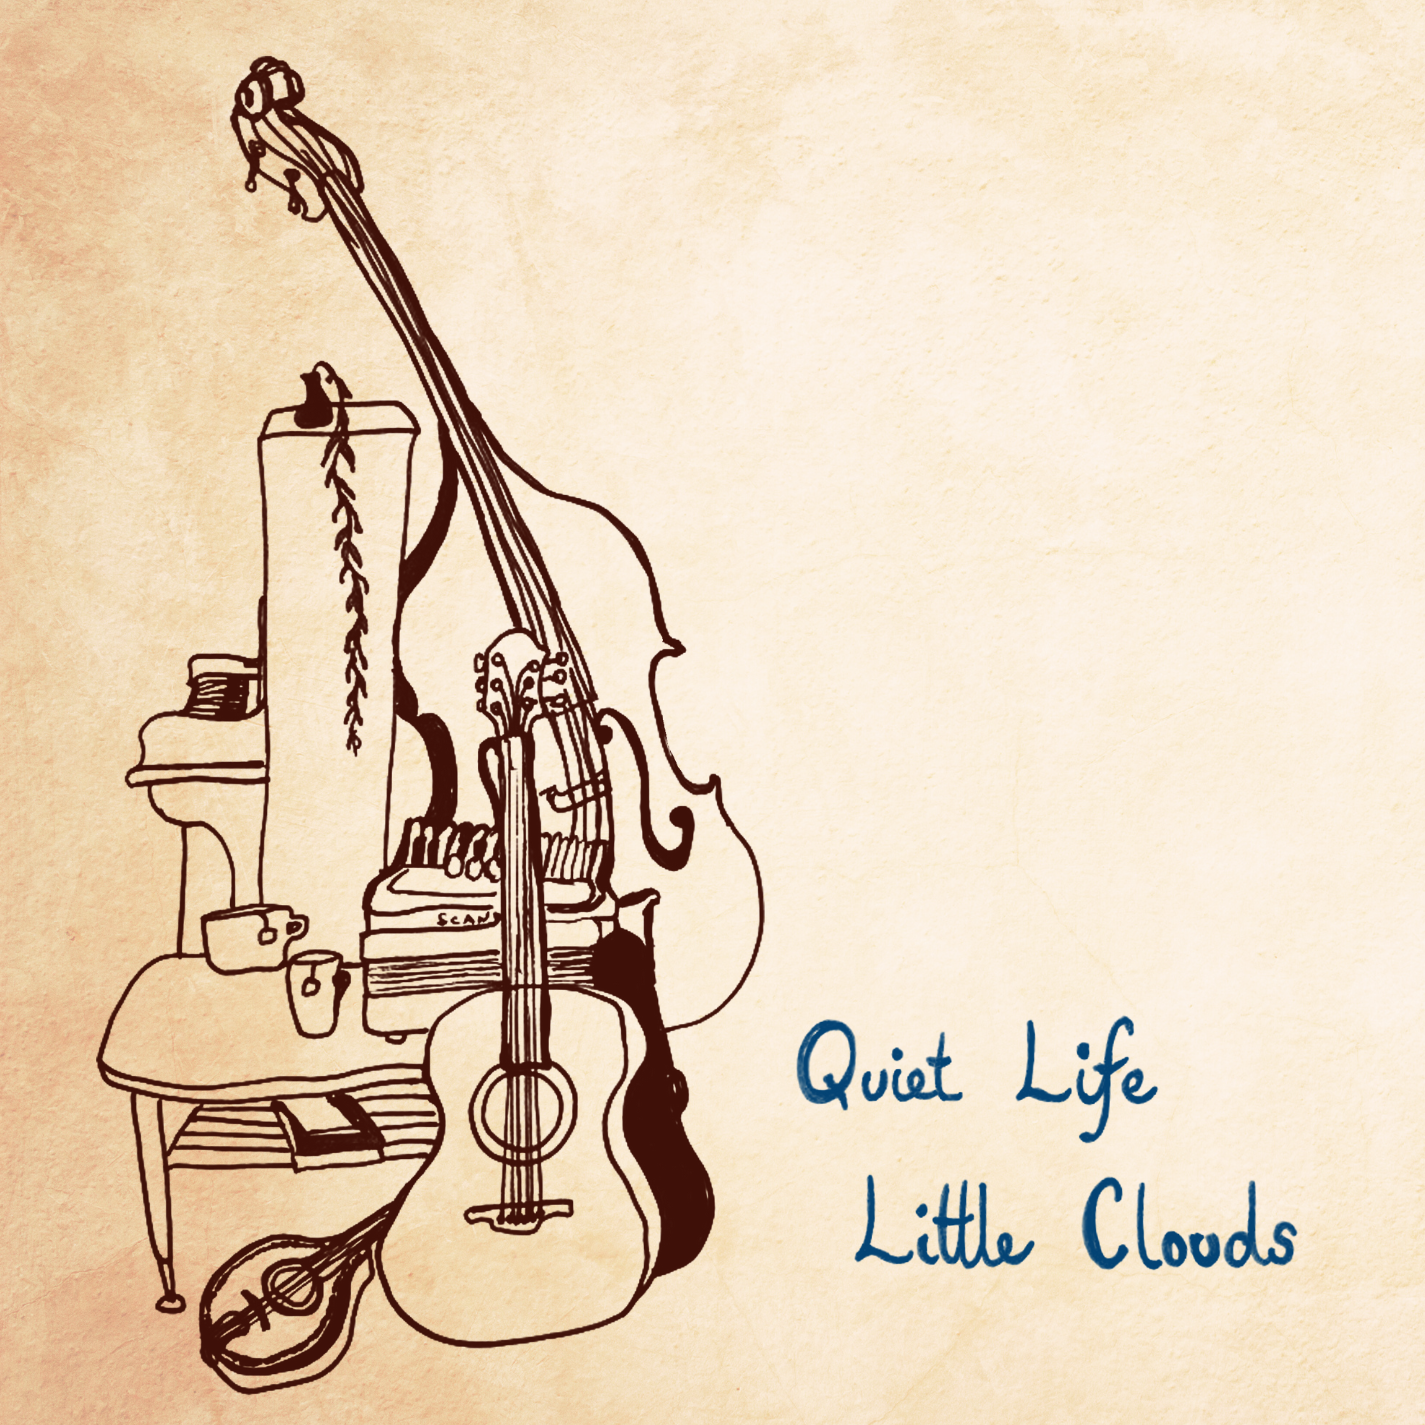 Little Clouds release ‘Quiet Life’